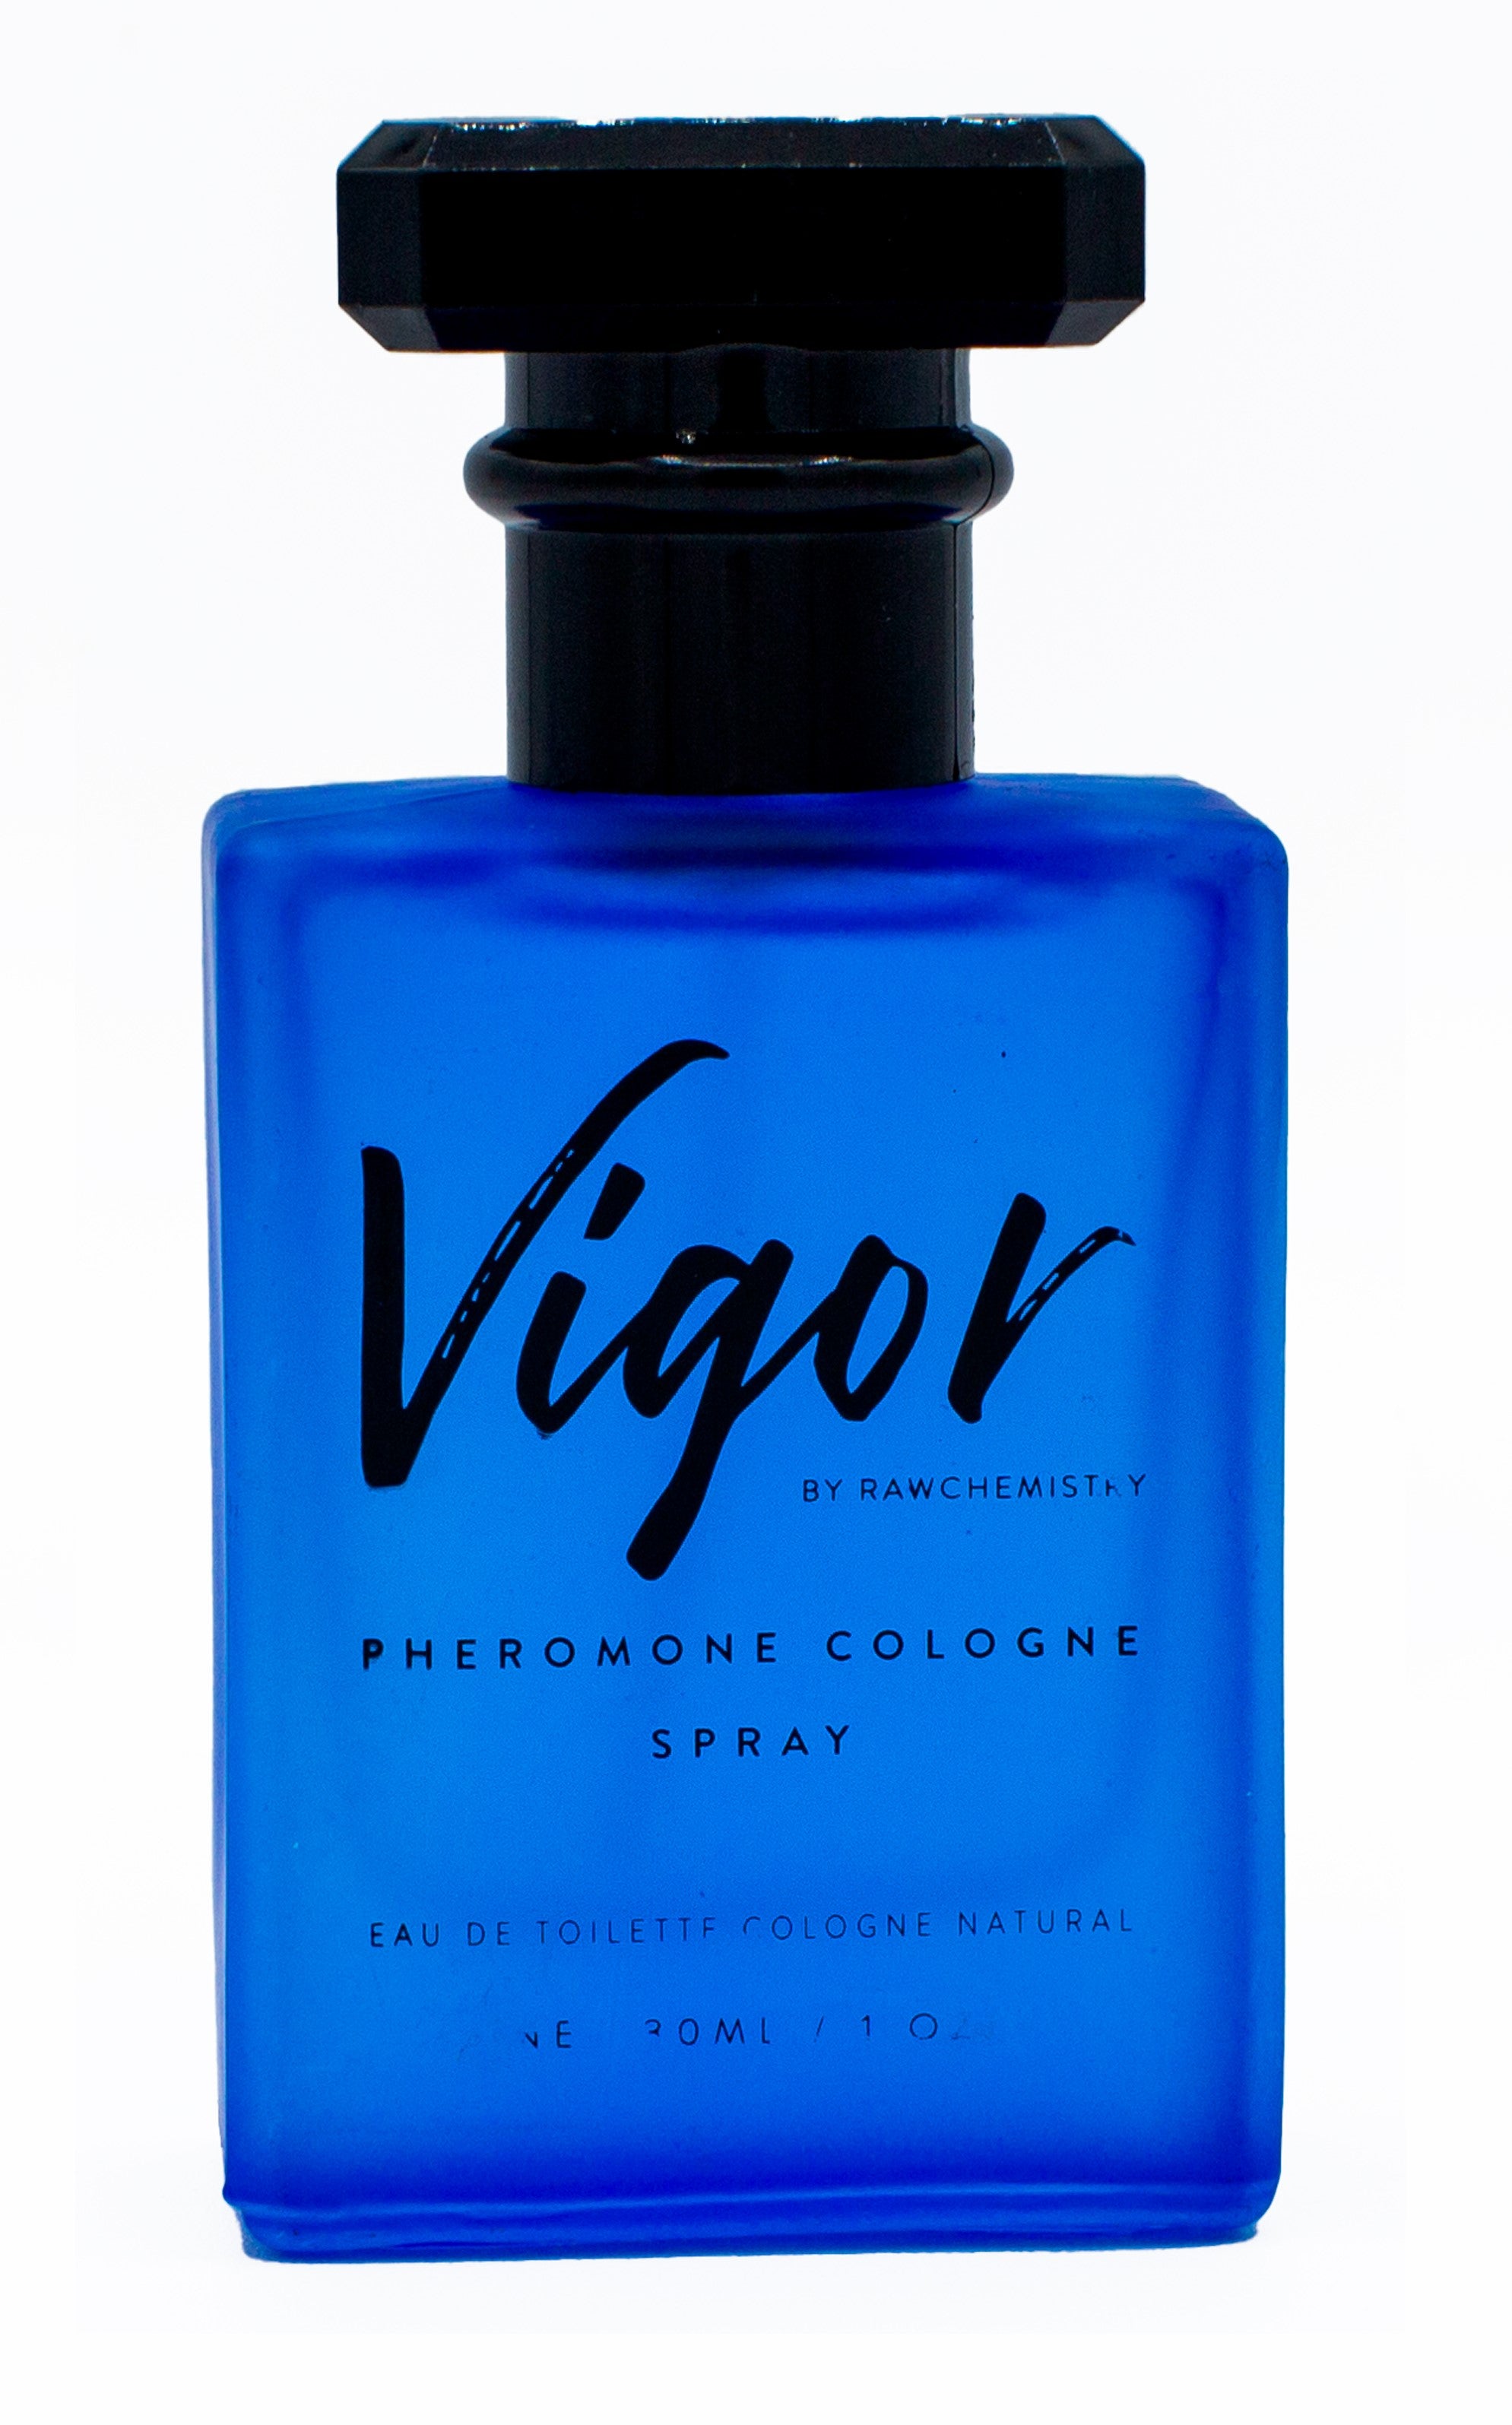 Vigor by RawChemistry a Pheromone Cologne for Men